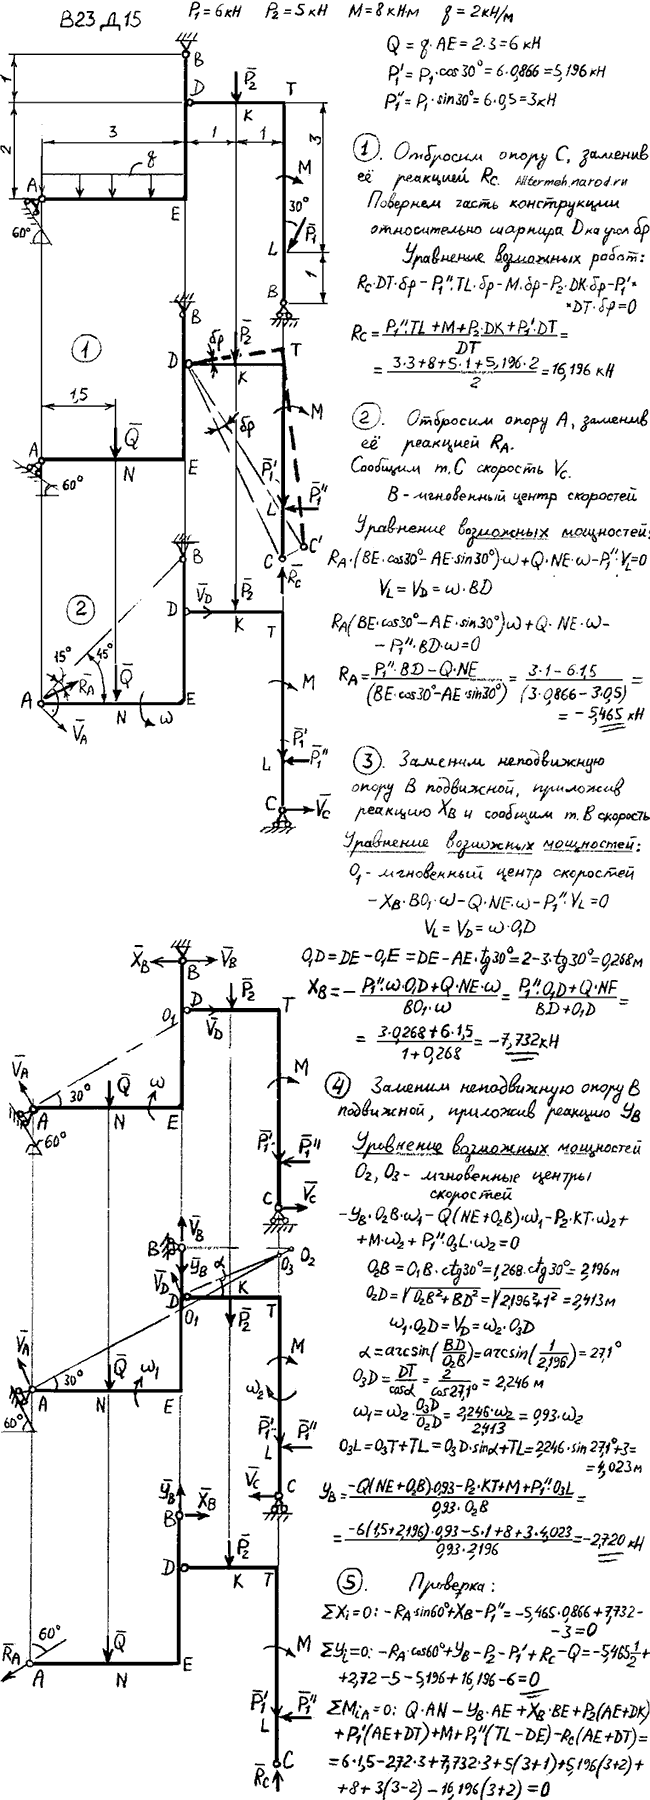 Задание Д.15 вариант 23. P1=6 кН, P2=5 кН, q=2 кН/м, M=8 кН*м